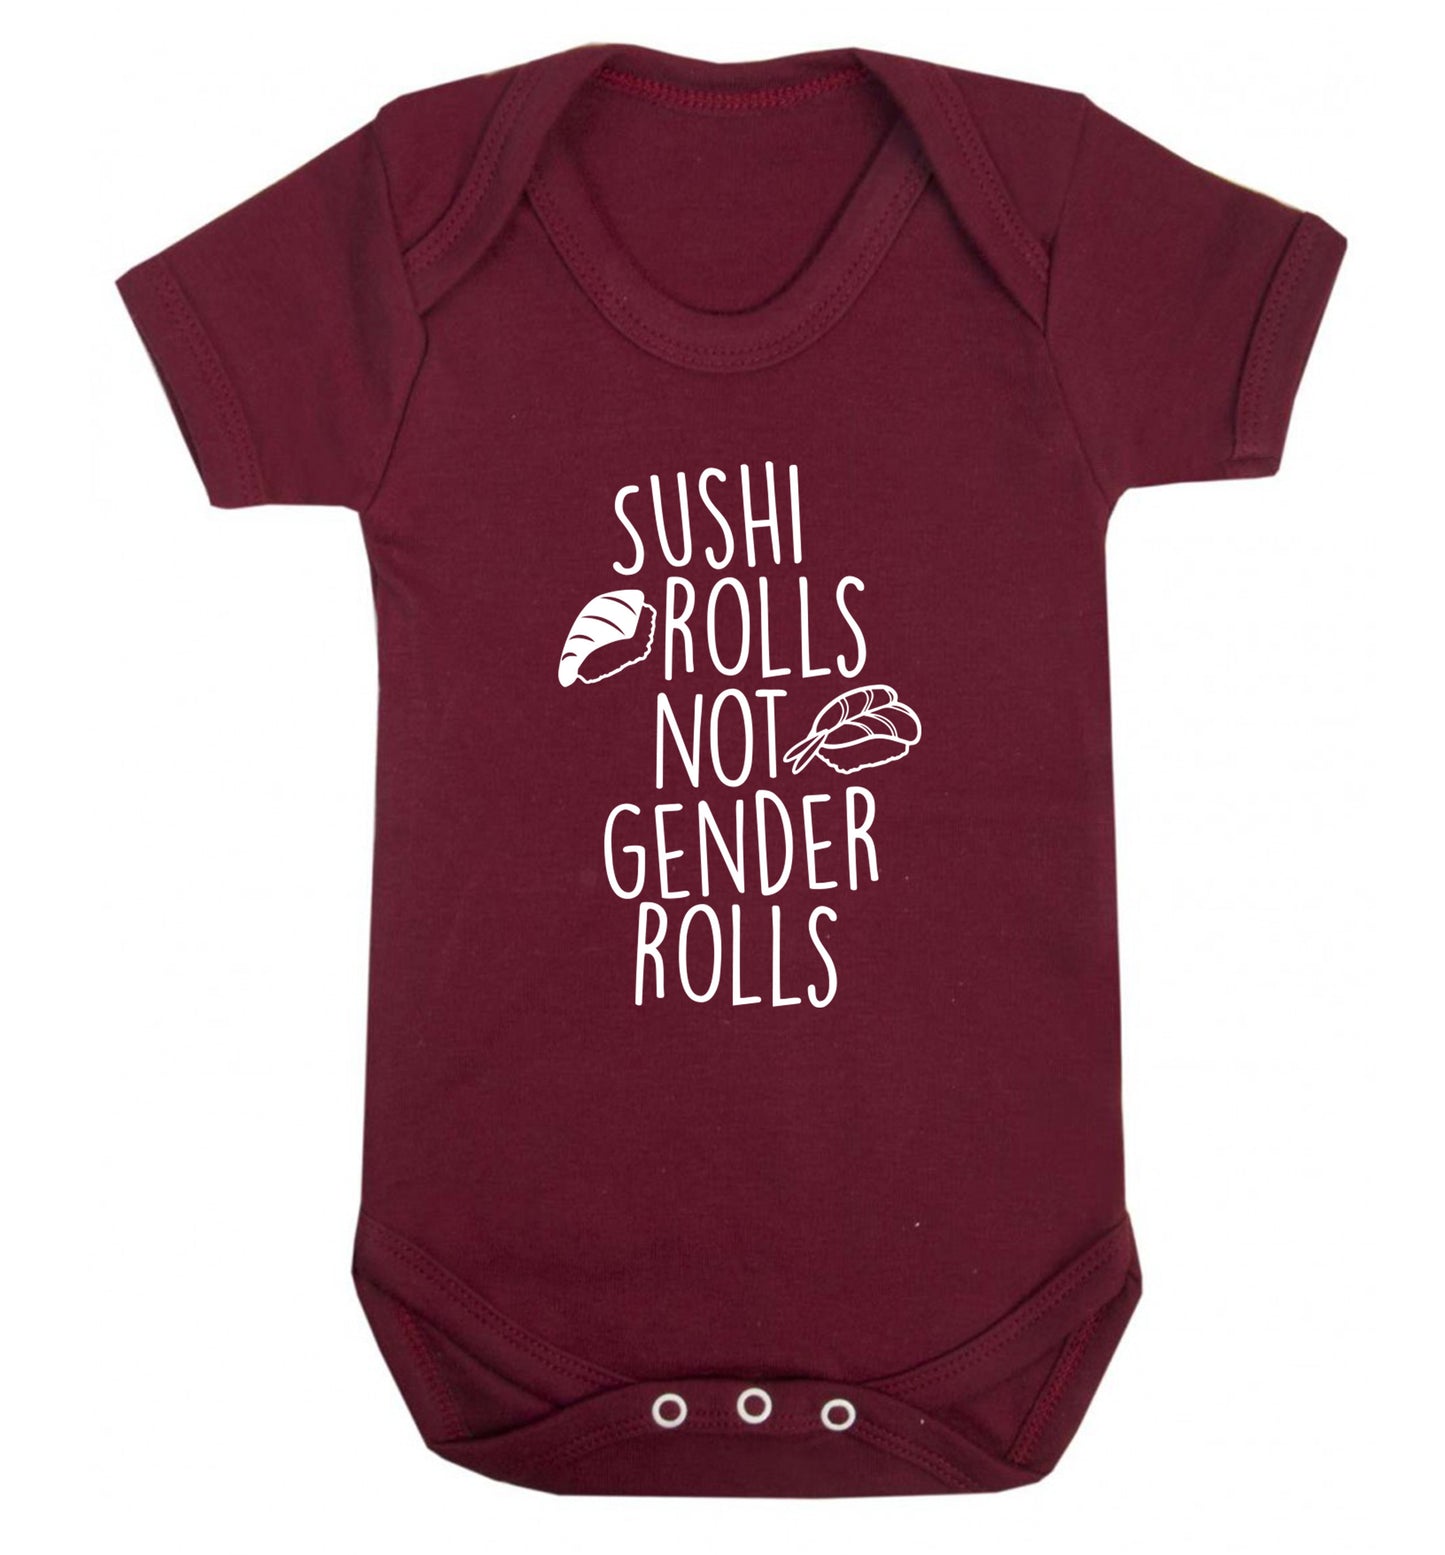 Sushi rolls not gender rolls Baby Vest maroon 18-24 months